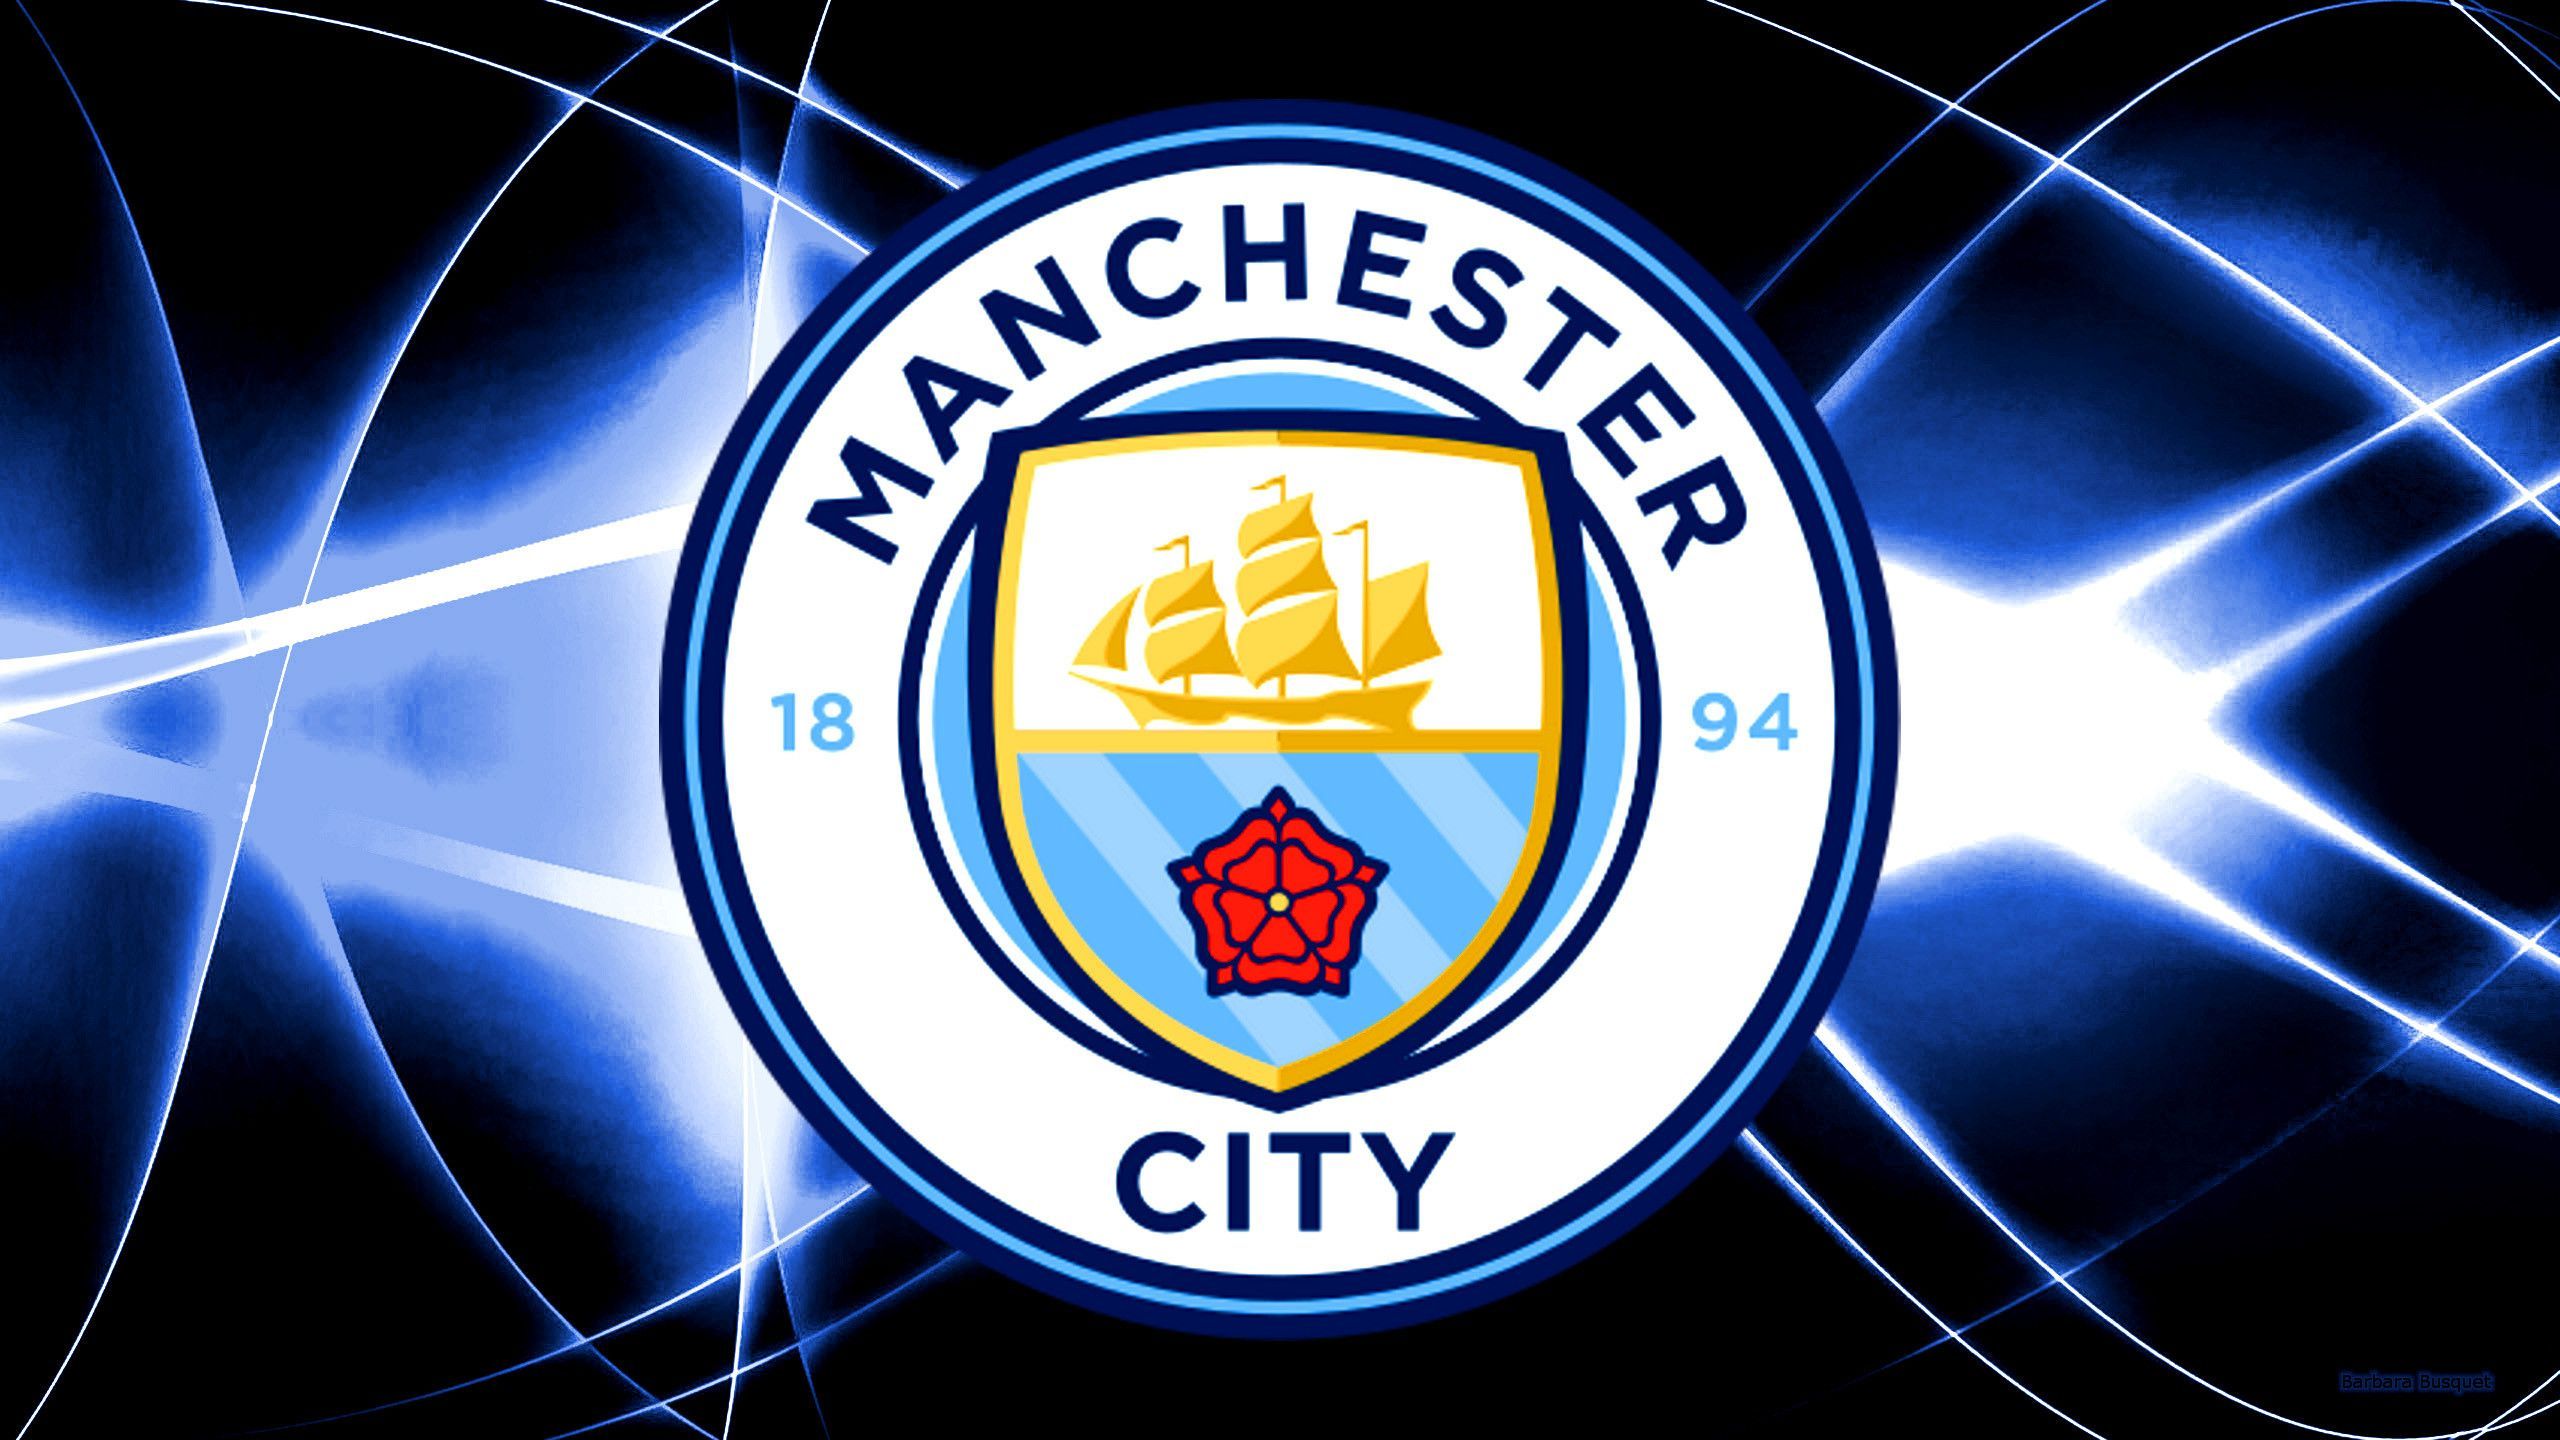 Manchester City Football Club Wallpaper Free Manchester City Football Club Background